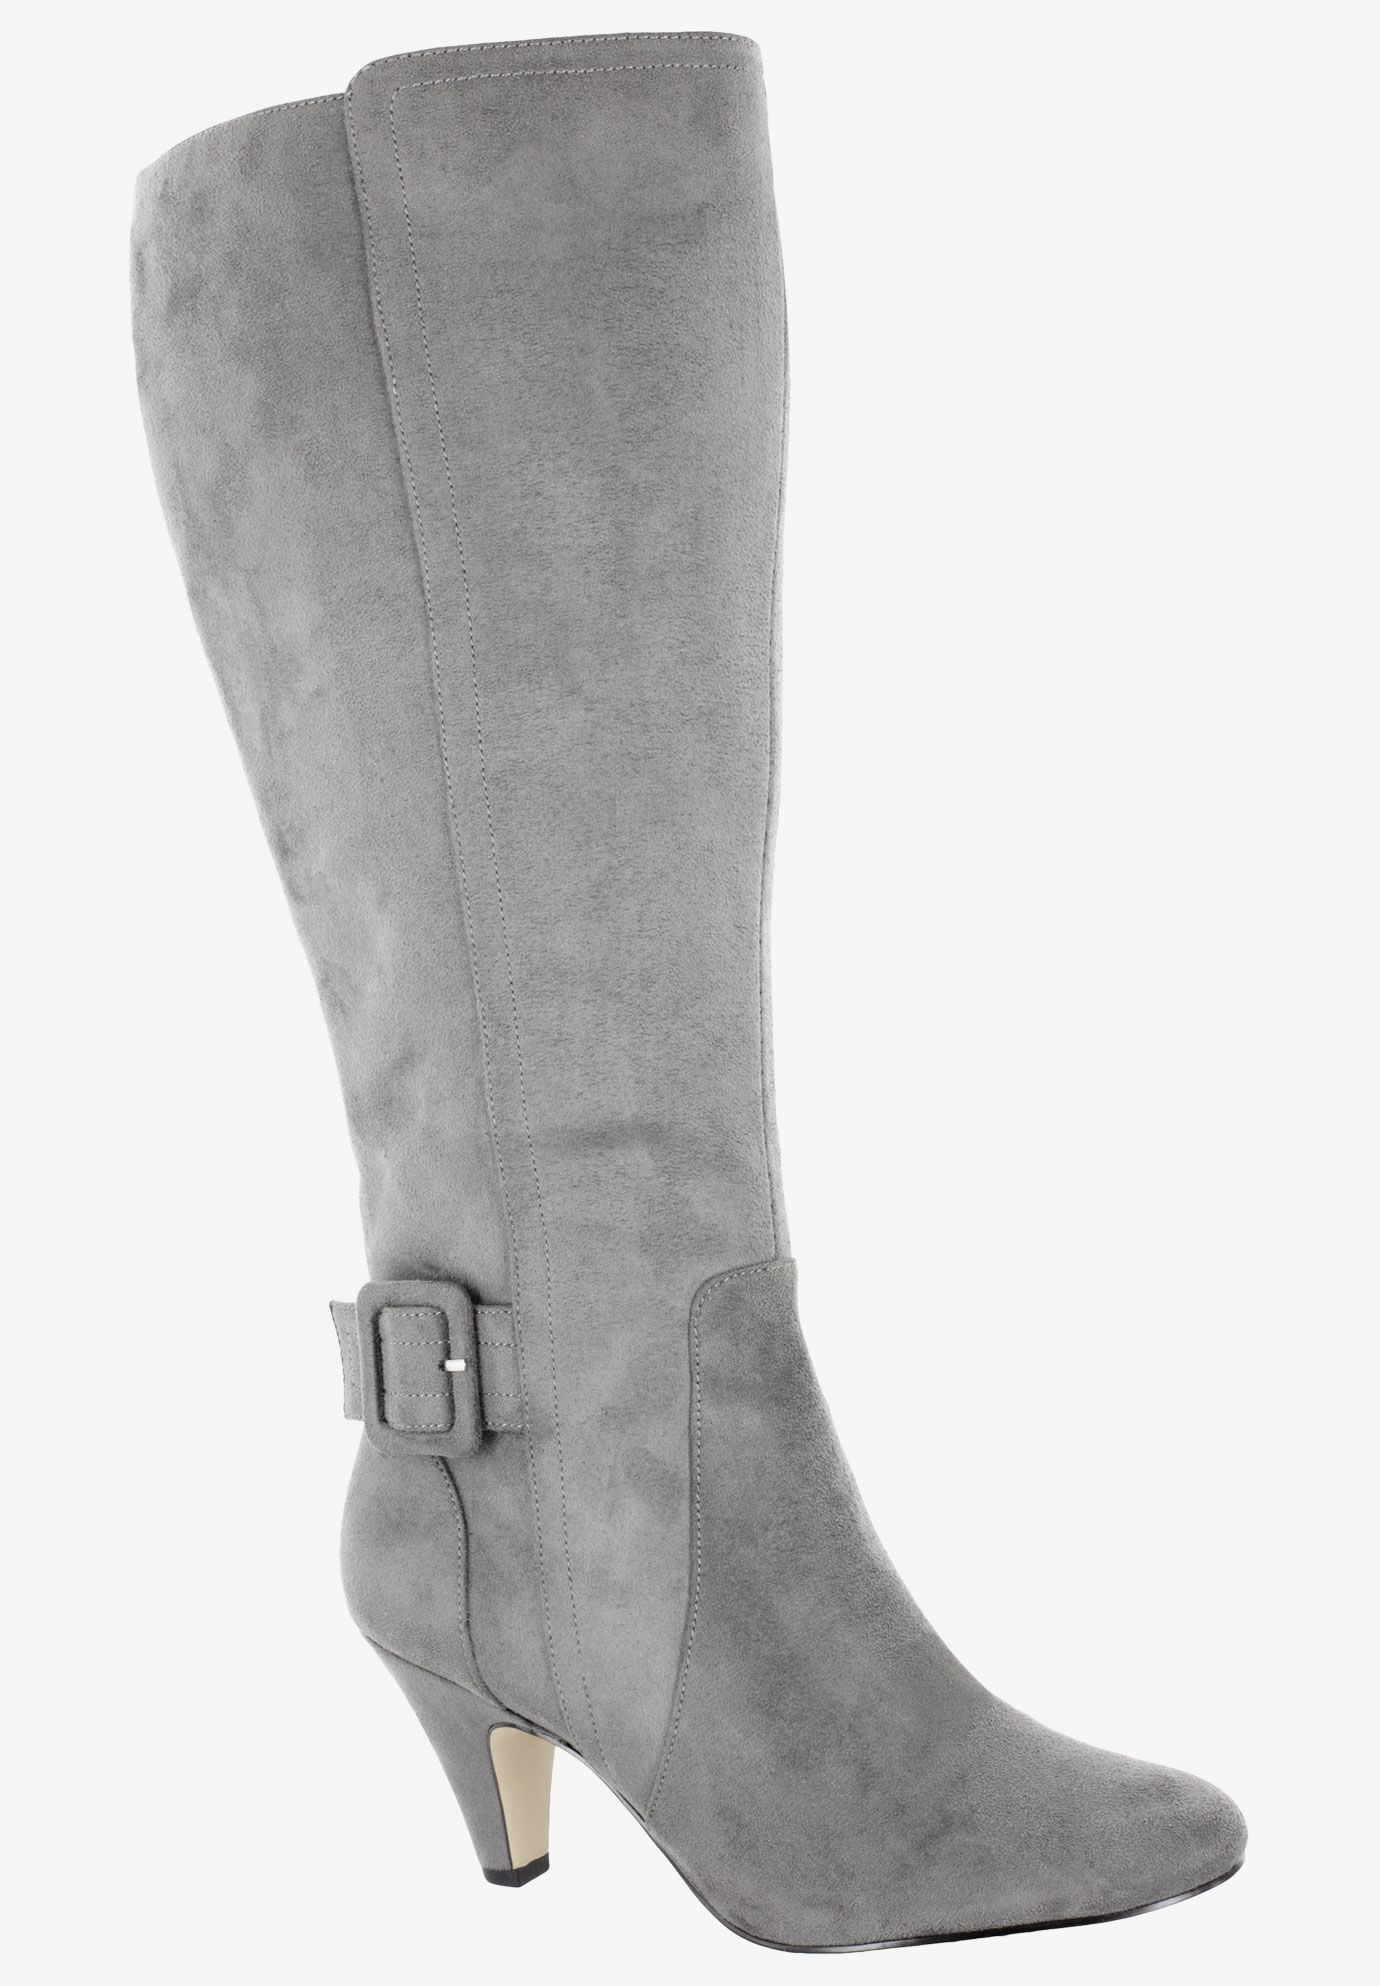 wide calf high heel boots